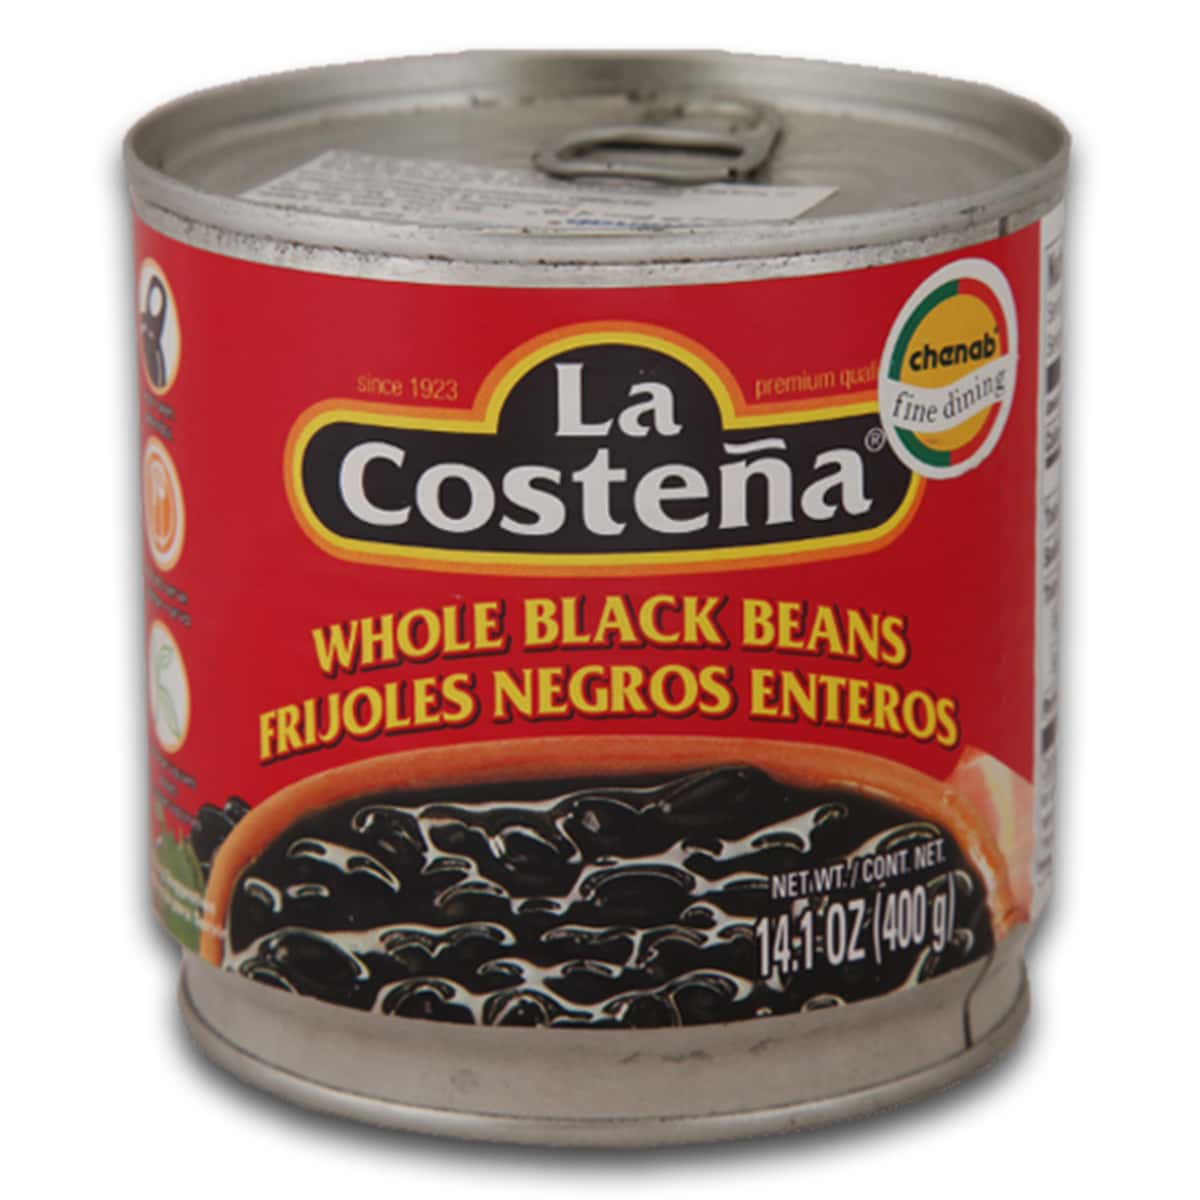 Buy La Costena Whole Black Beans (Frijoles Negros Enteros) - 400 gm